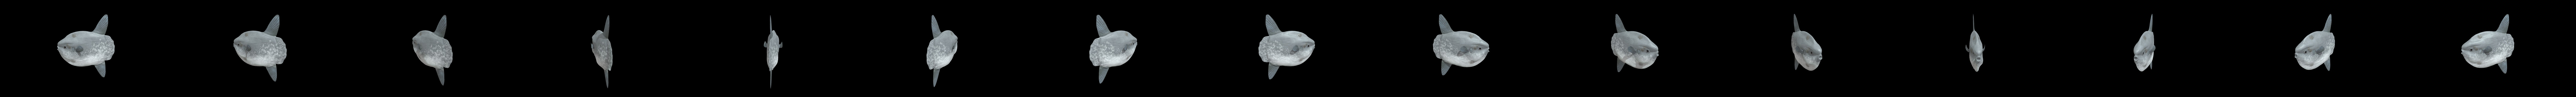 Sunfish - 3D model by The Virtual Zoo (@thevirtualzoo) [a63bd54]